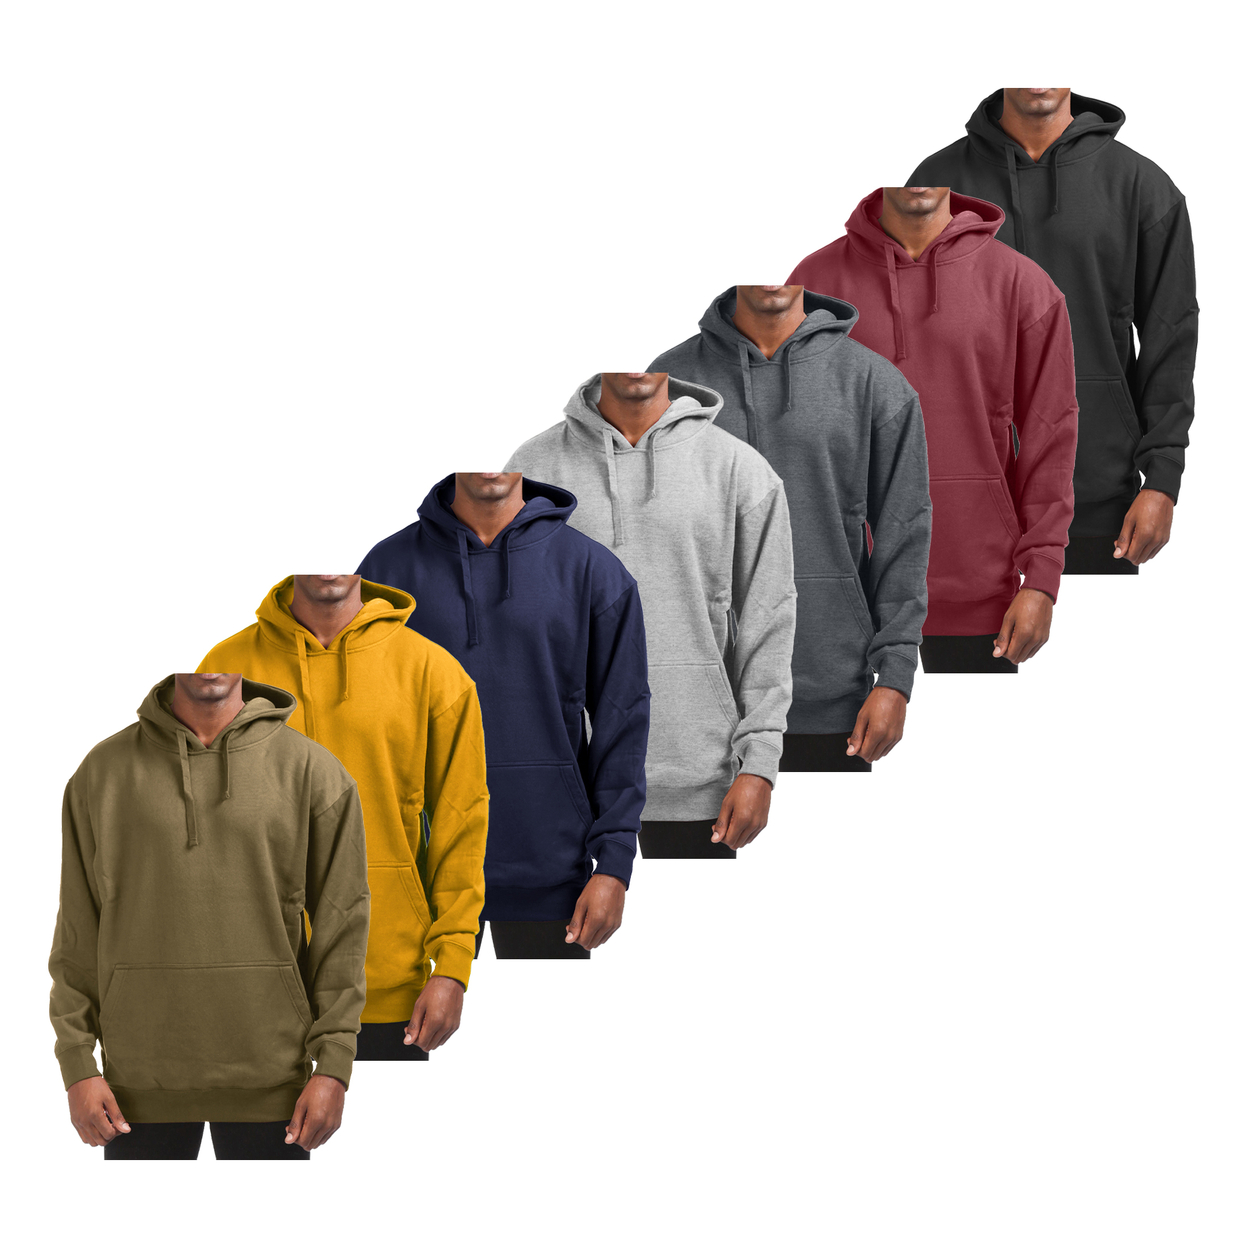 2-Pack: Men's Super-Soft Winter Warm Cotton-Blend Fleece Pullover Hoodie With Kangaroo Pocket - Black & Black, Xx-large